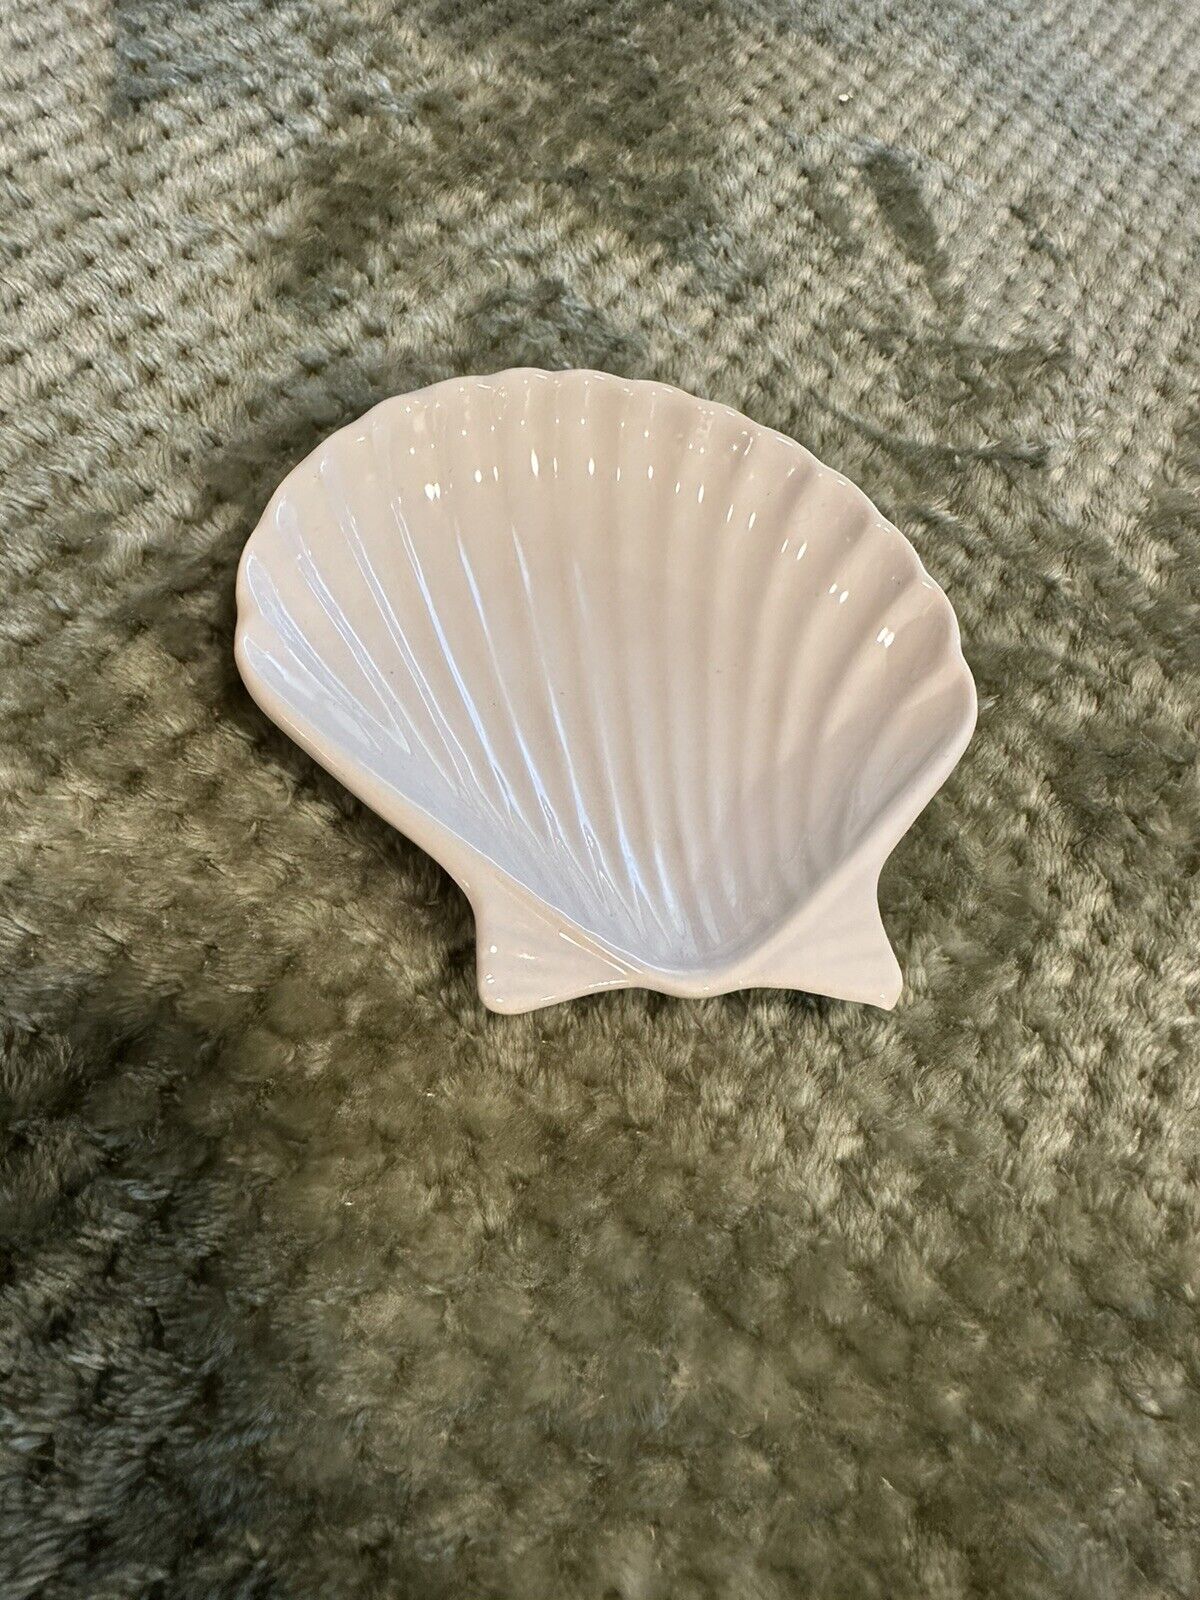 Vintage White Seashell Trinket Dish